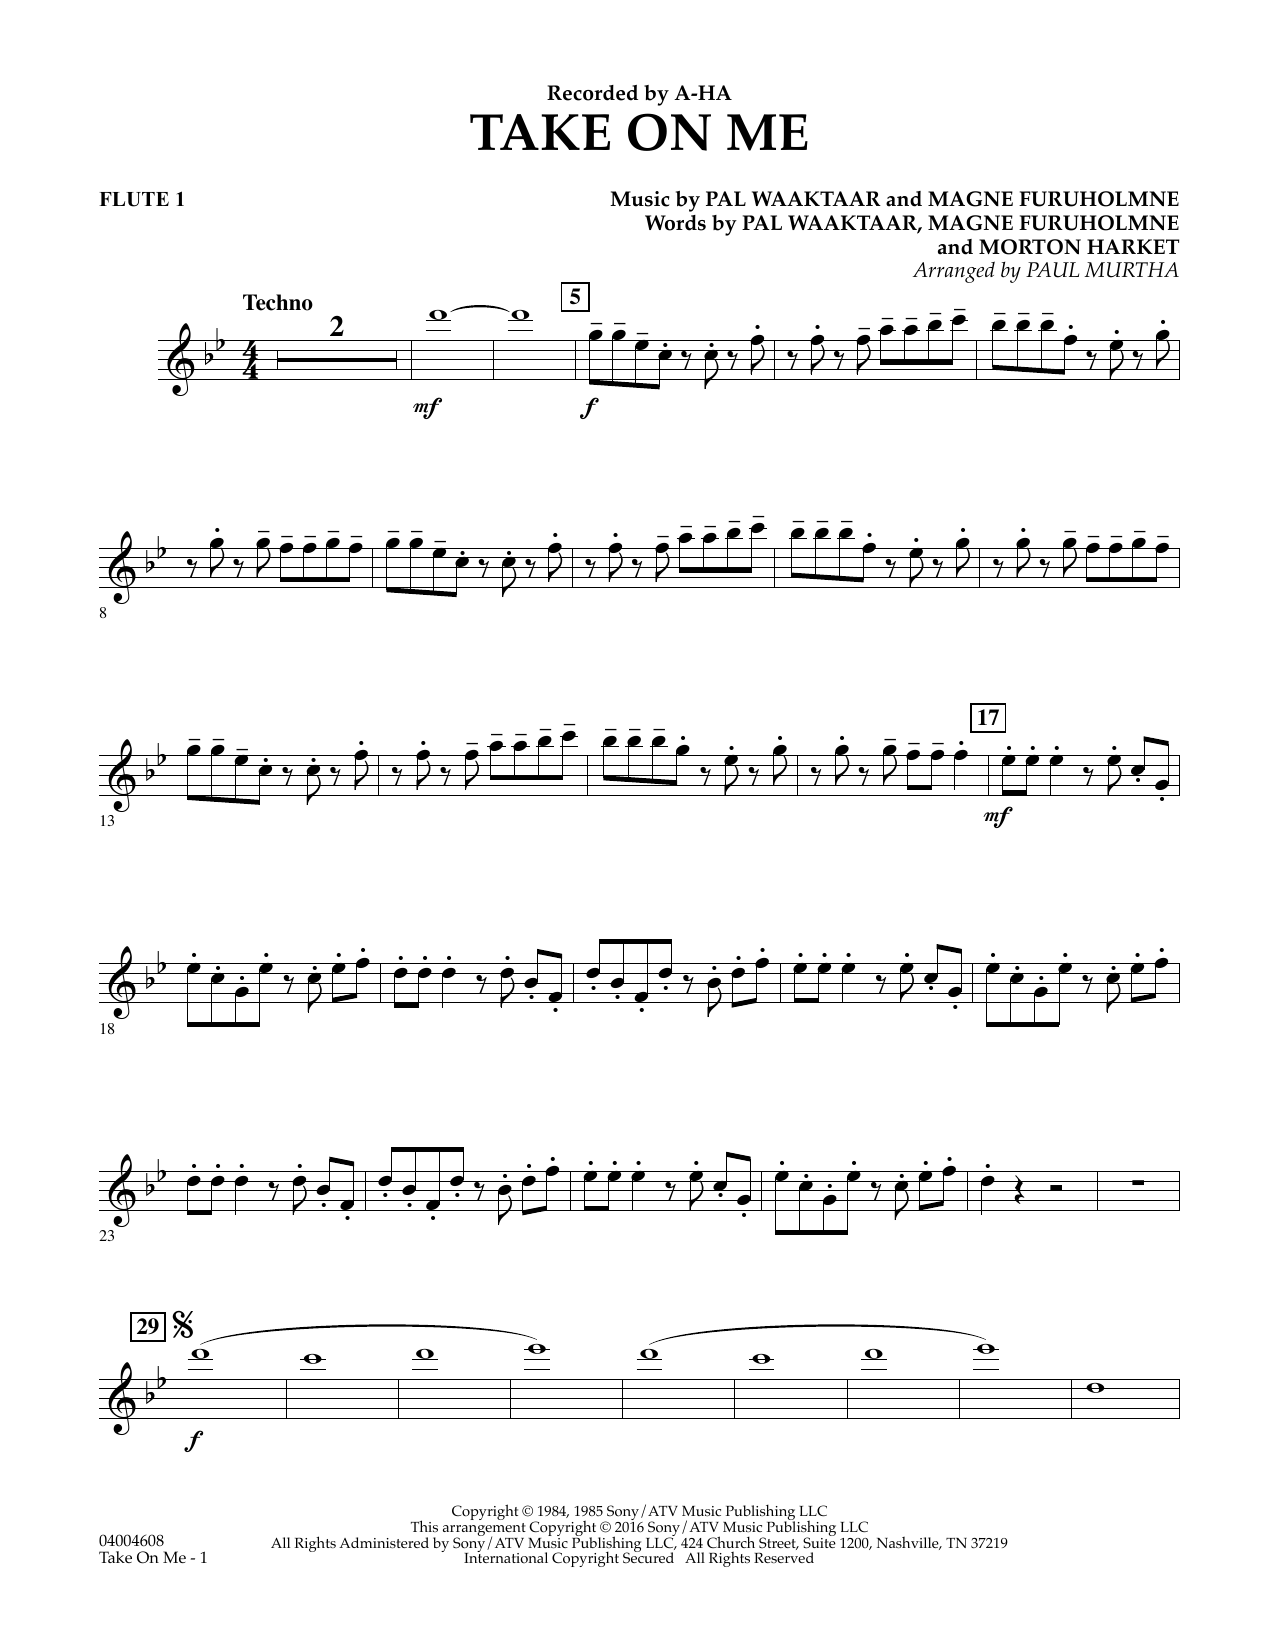 Download Paul Murtha Take on Me - Flute 1 Sheet Music